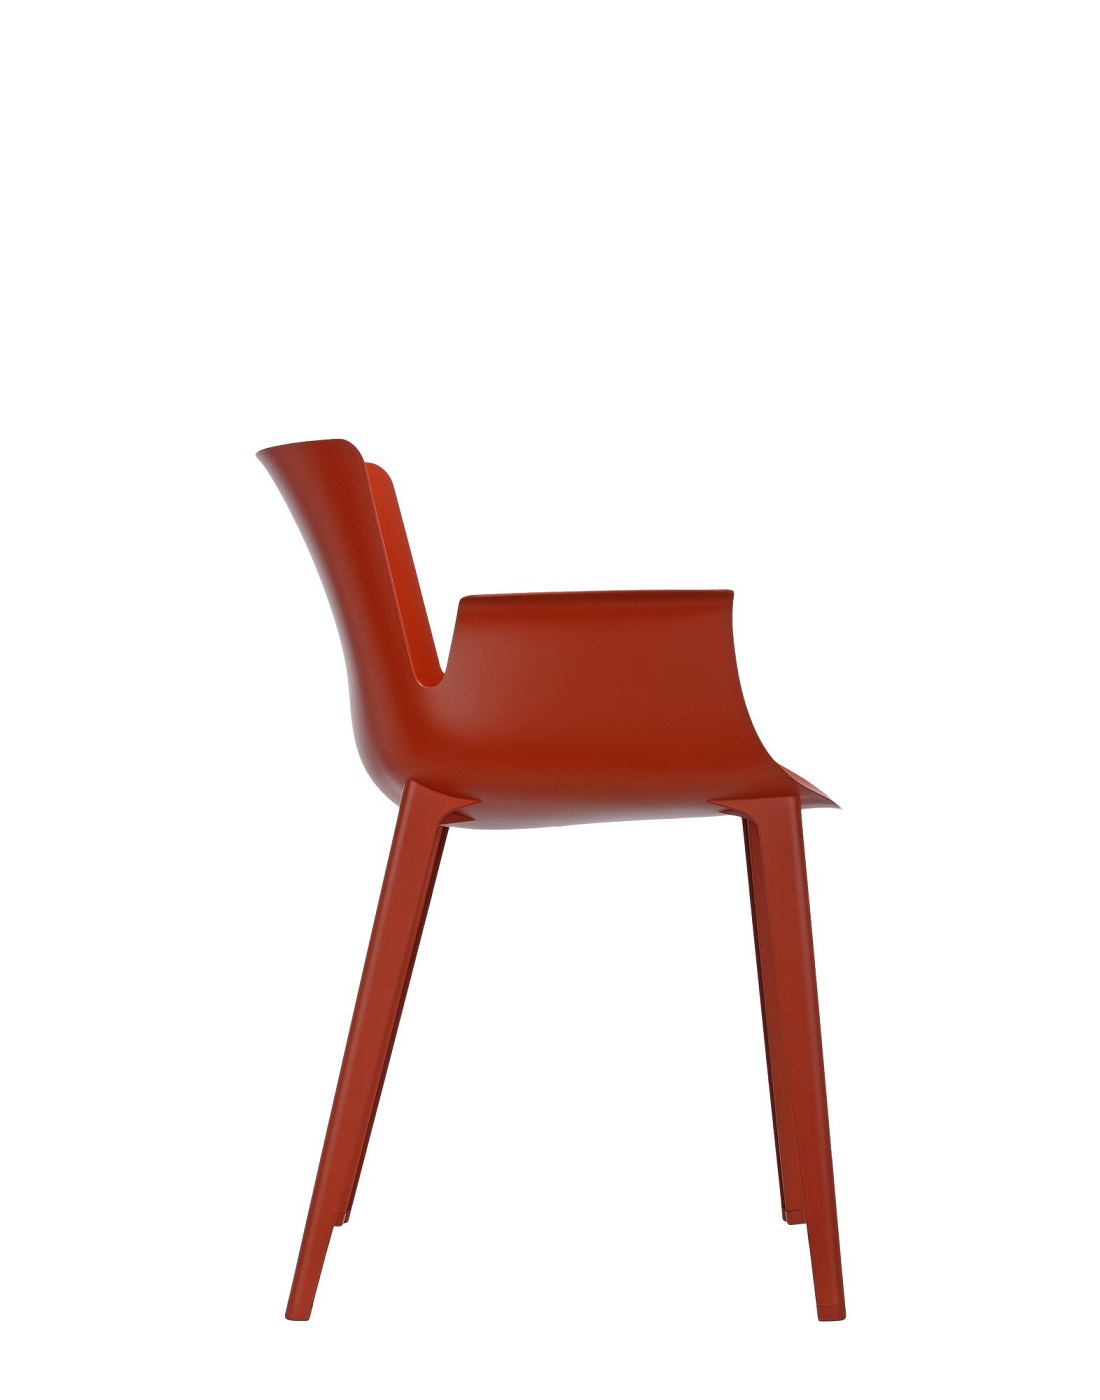 chair-piuma-philippe-starck-RU-side